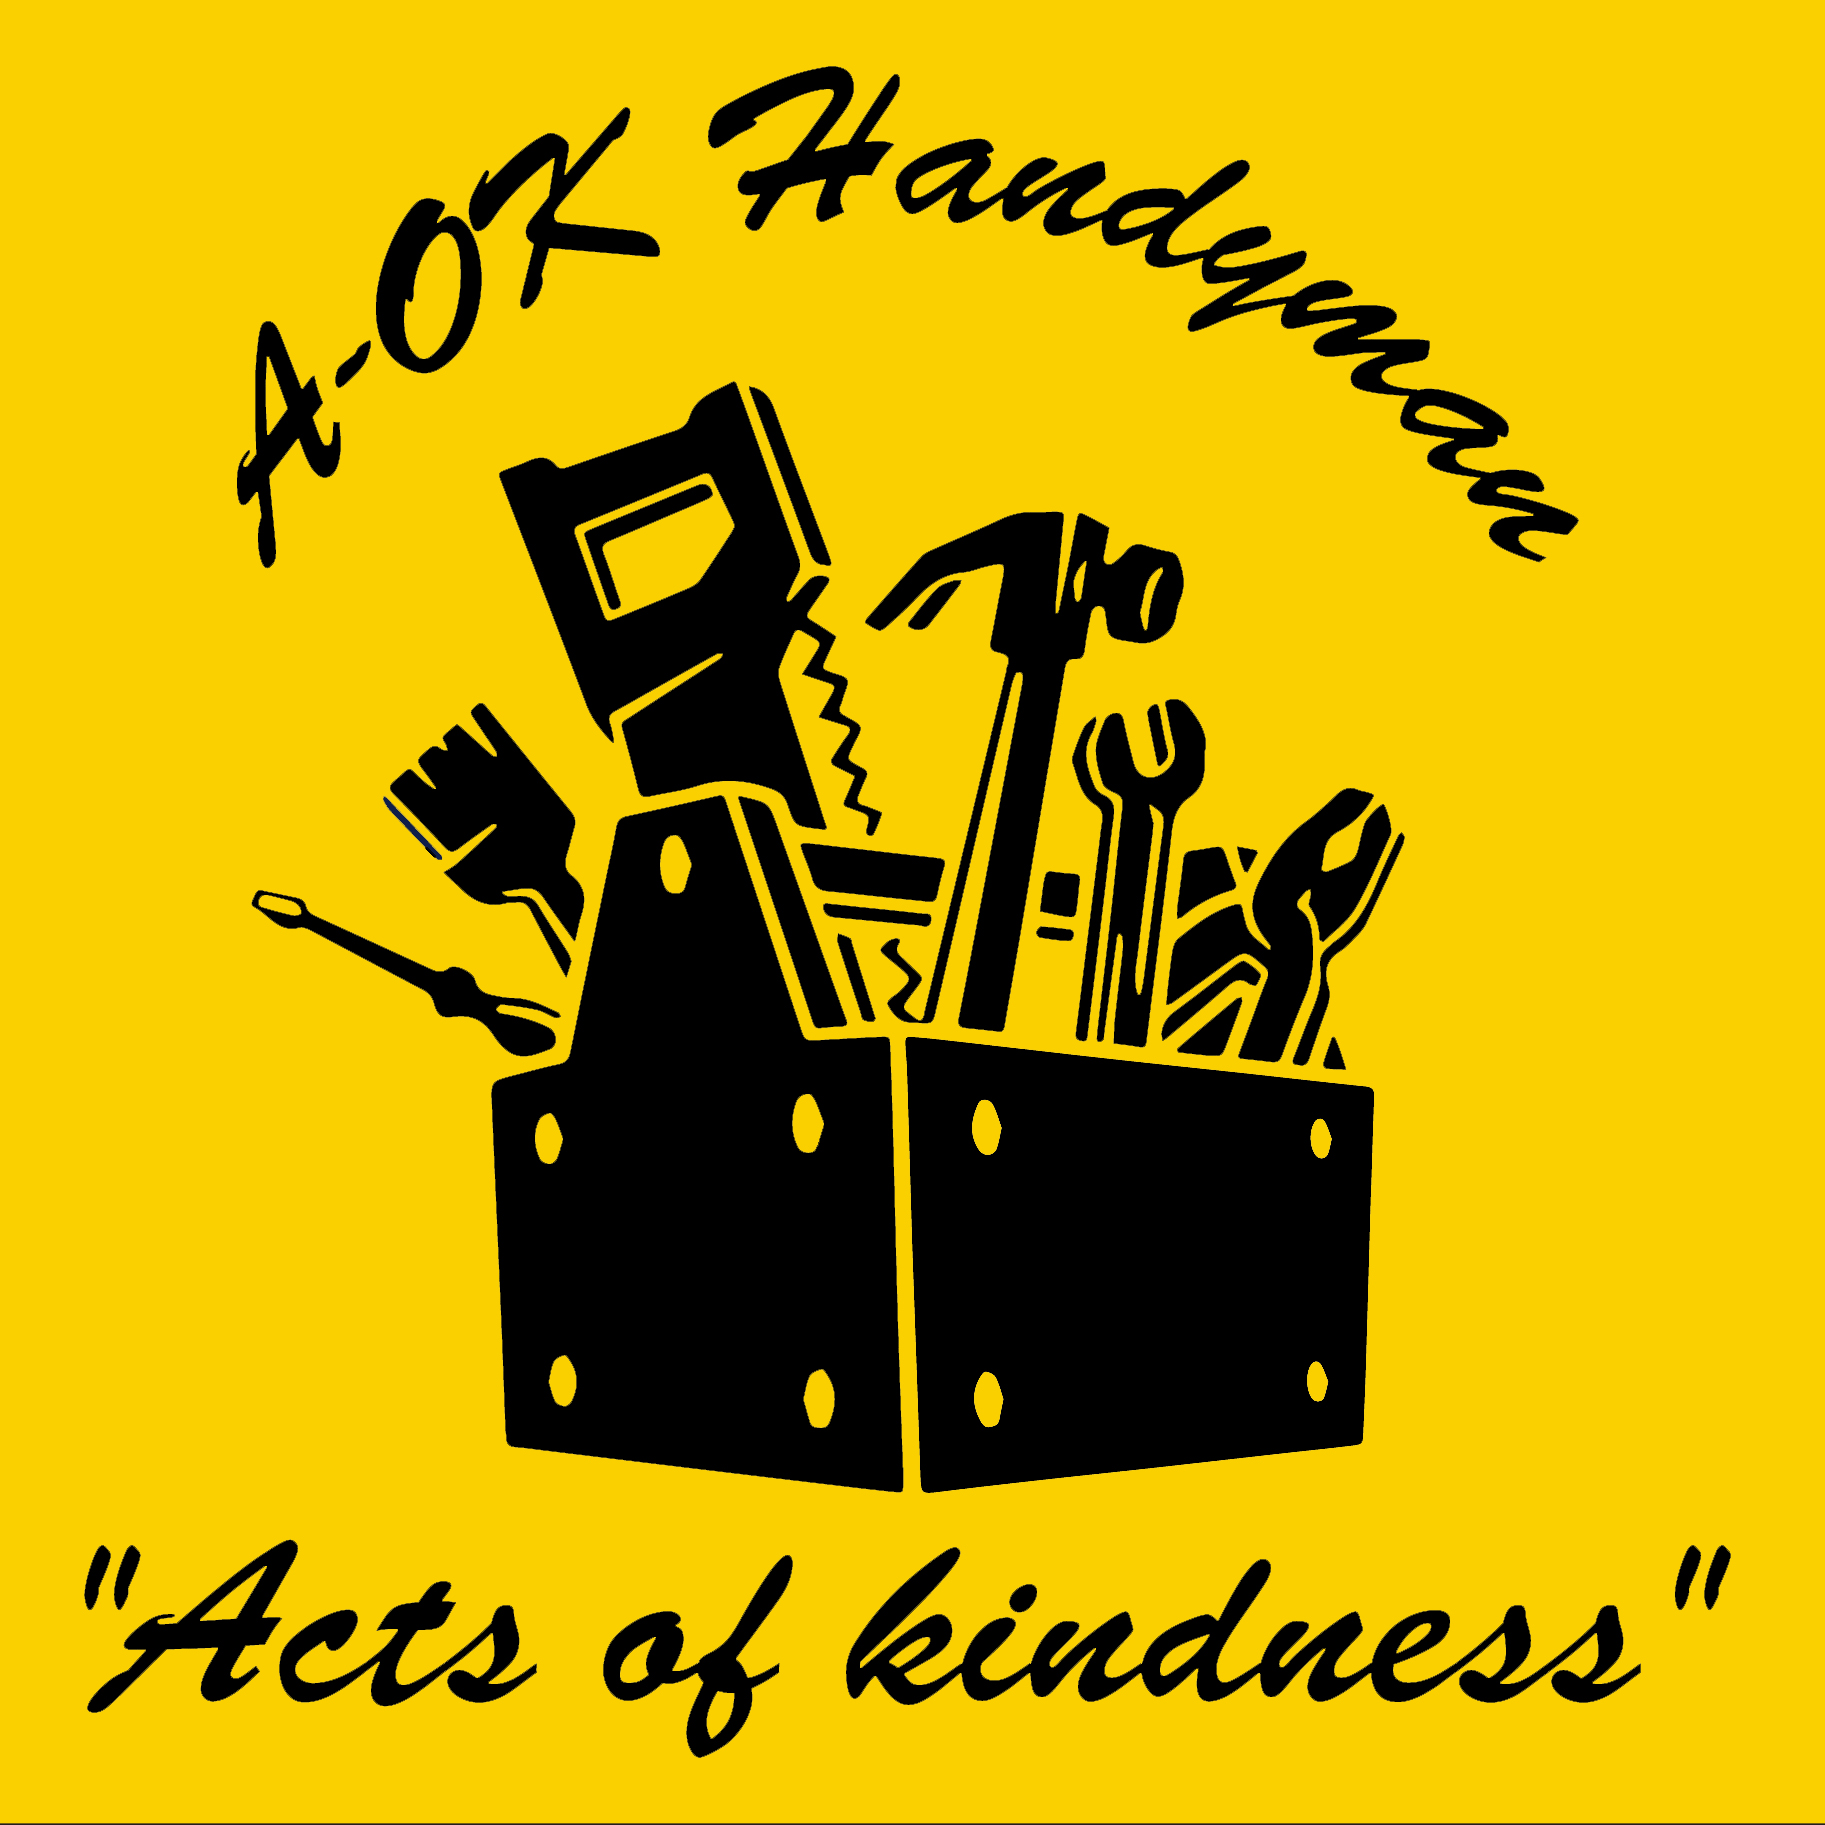 A-OK Handyman Logo